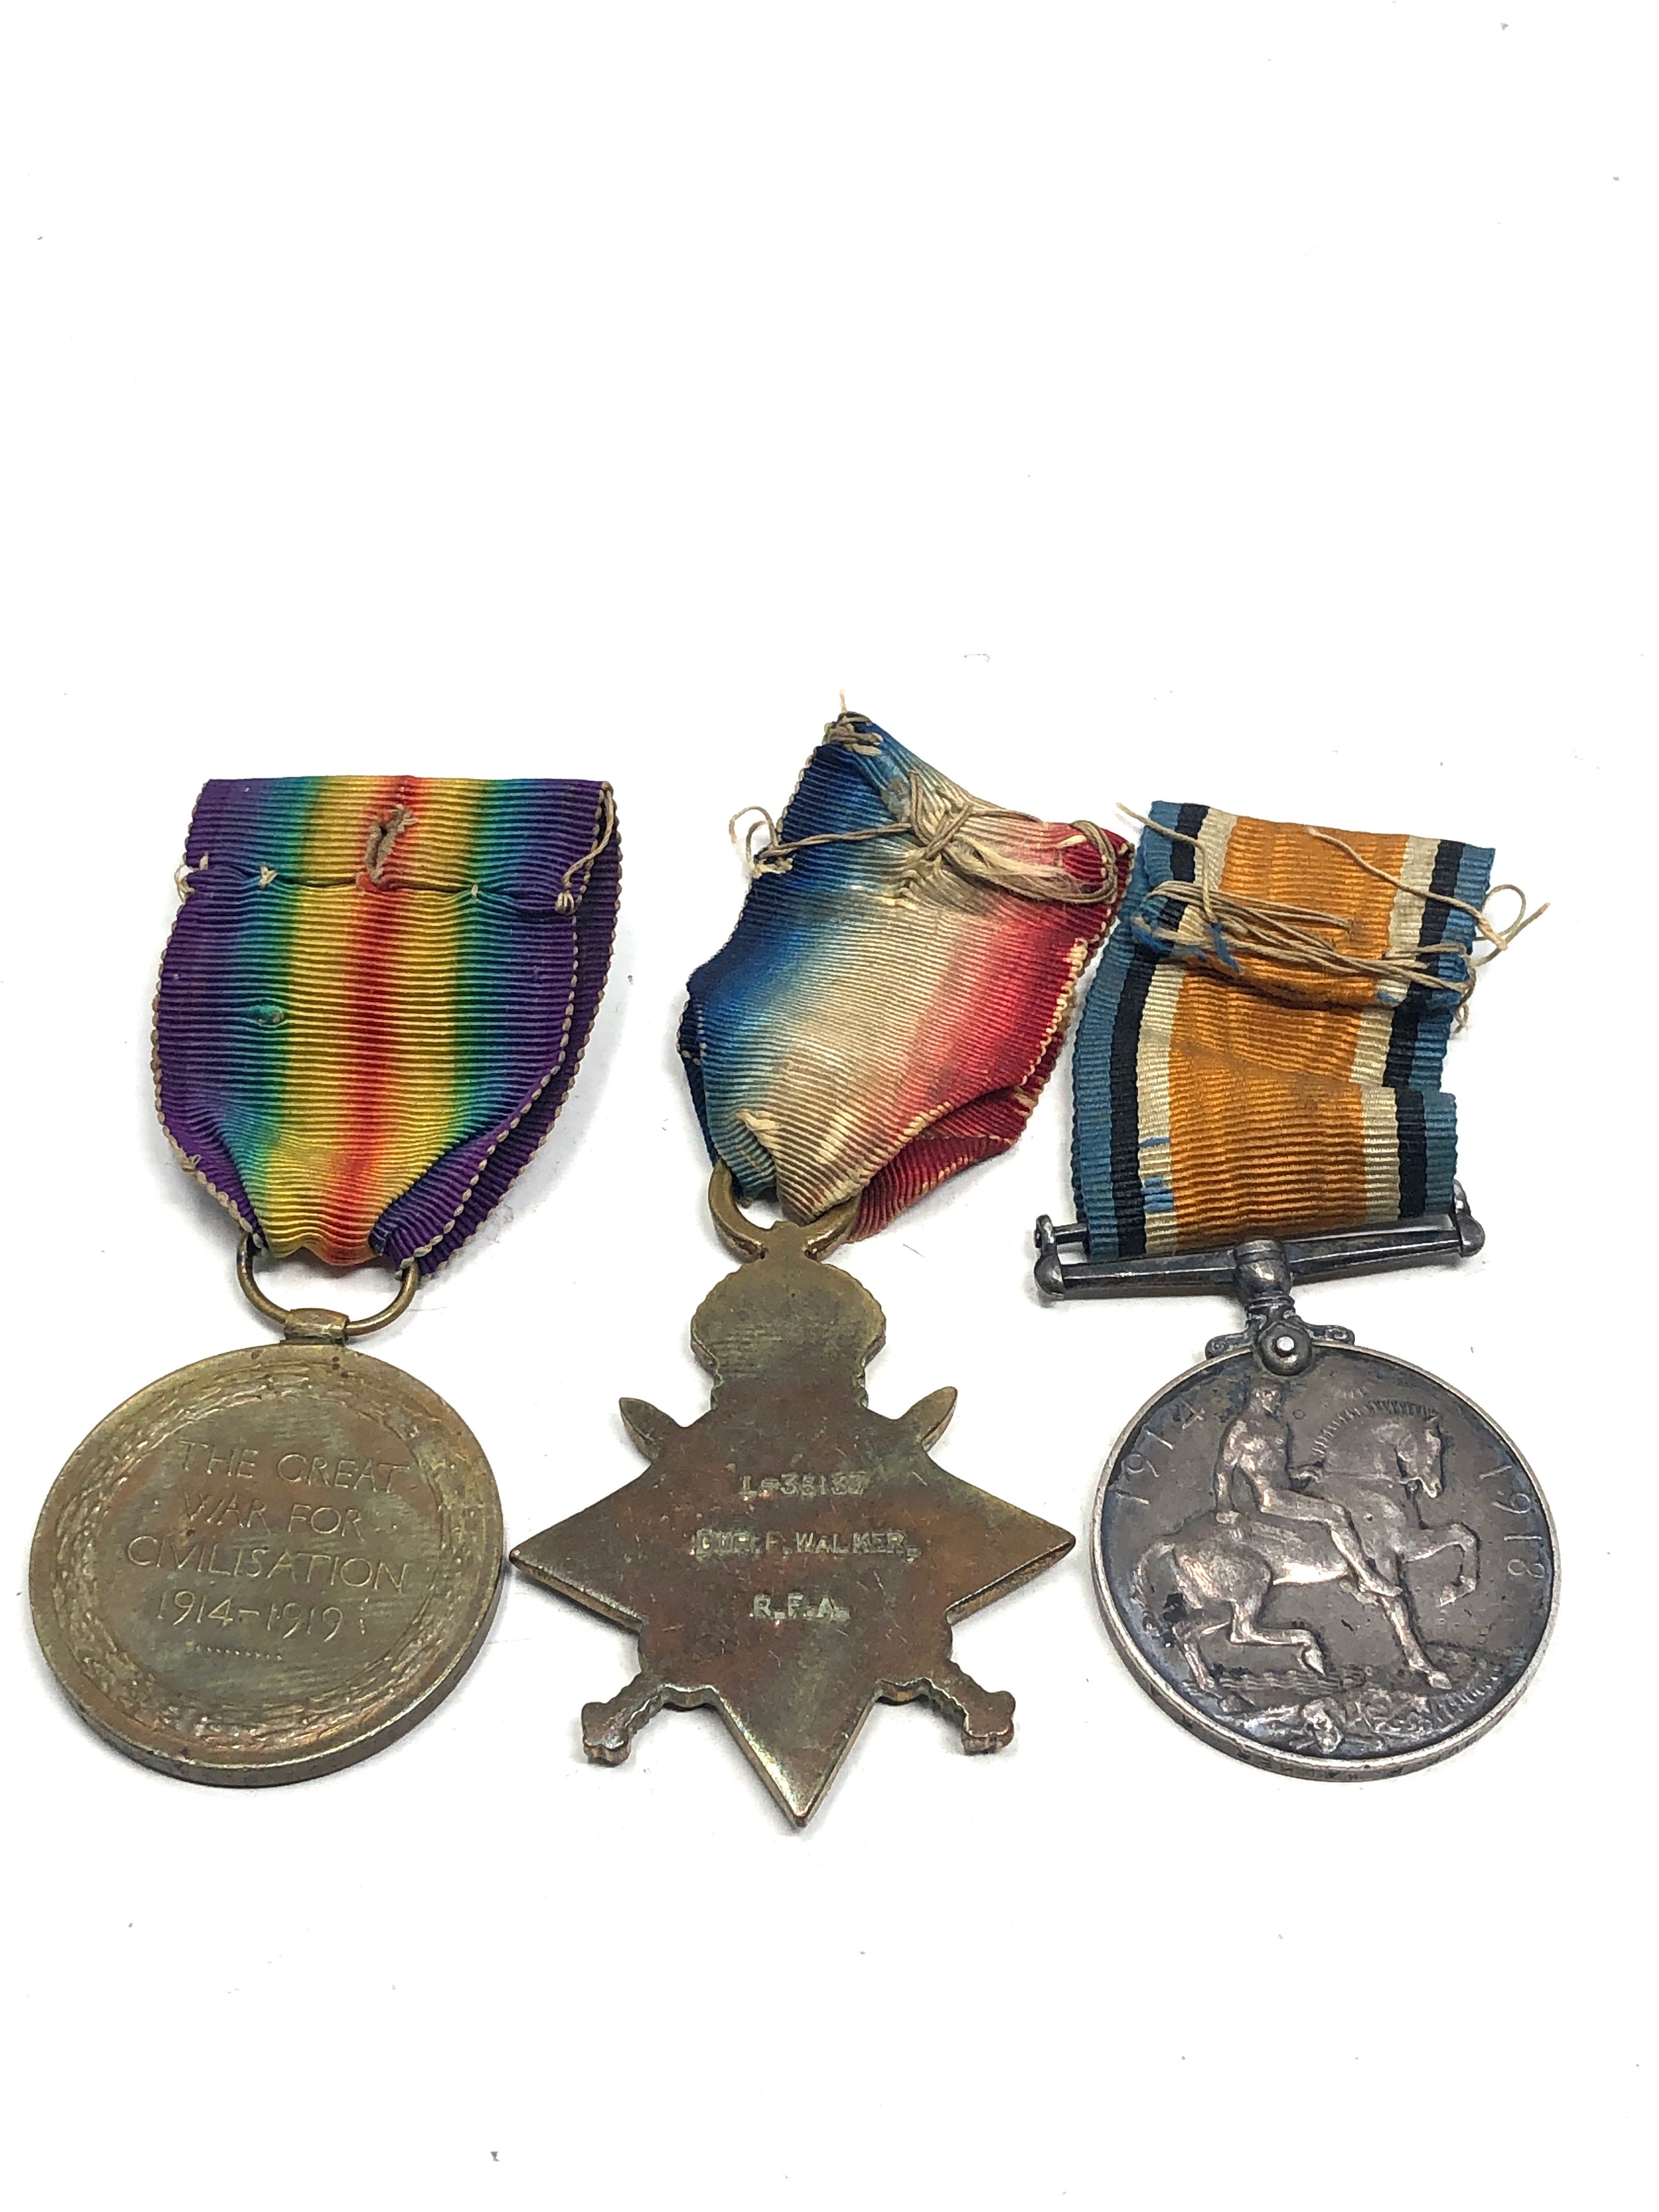 ww1 trio medals to l-35137 dvr.f.walker r.f.a - Image 2 of 2